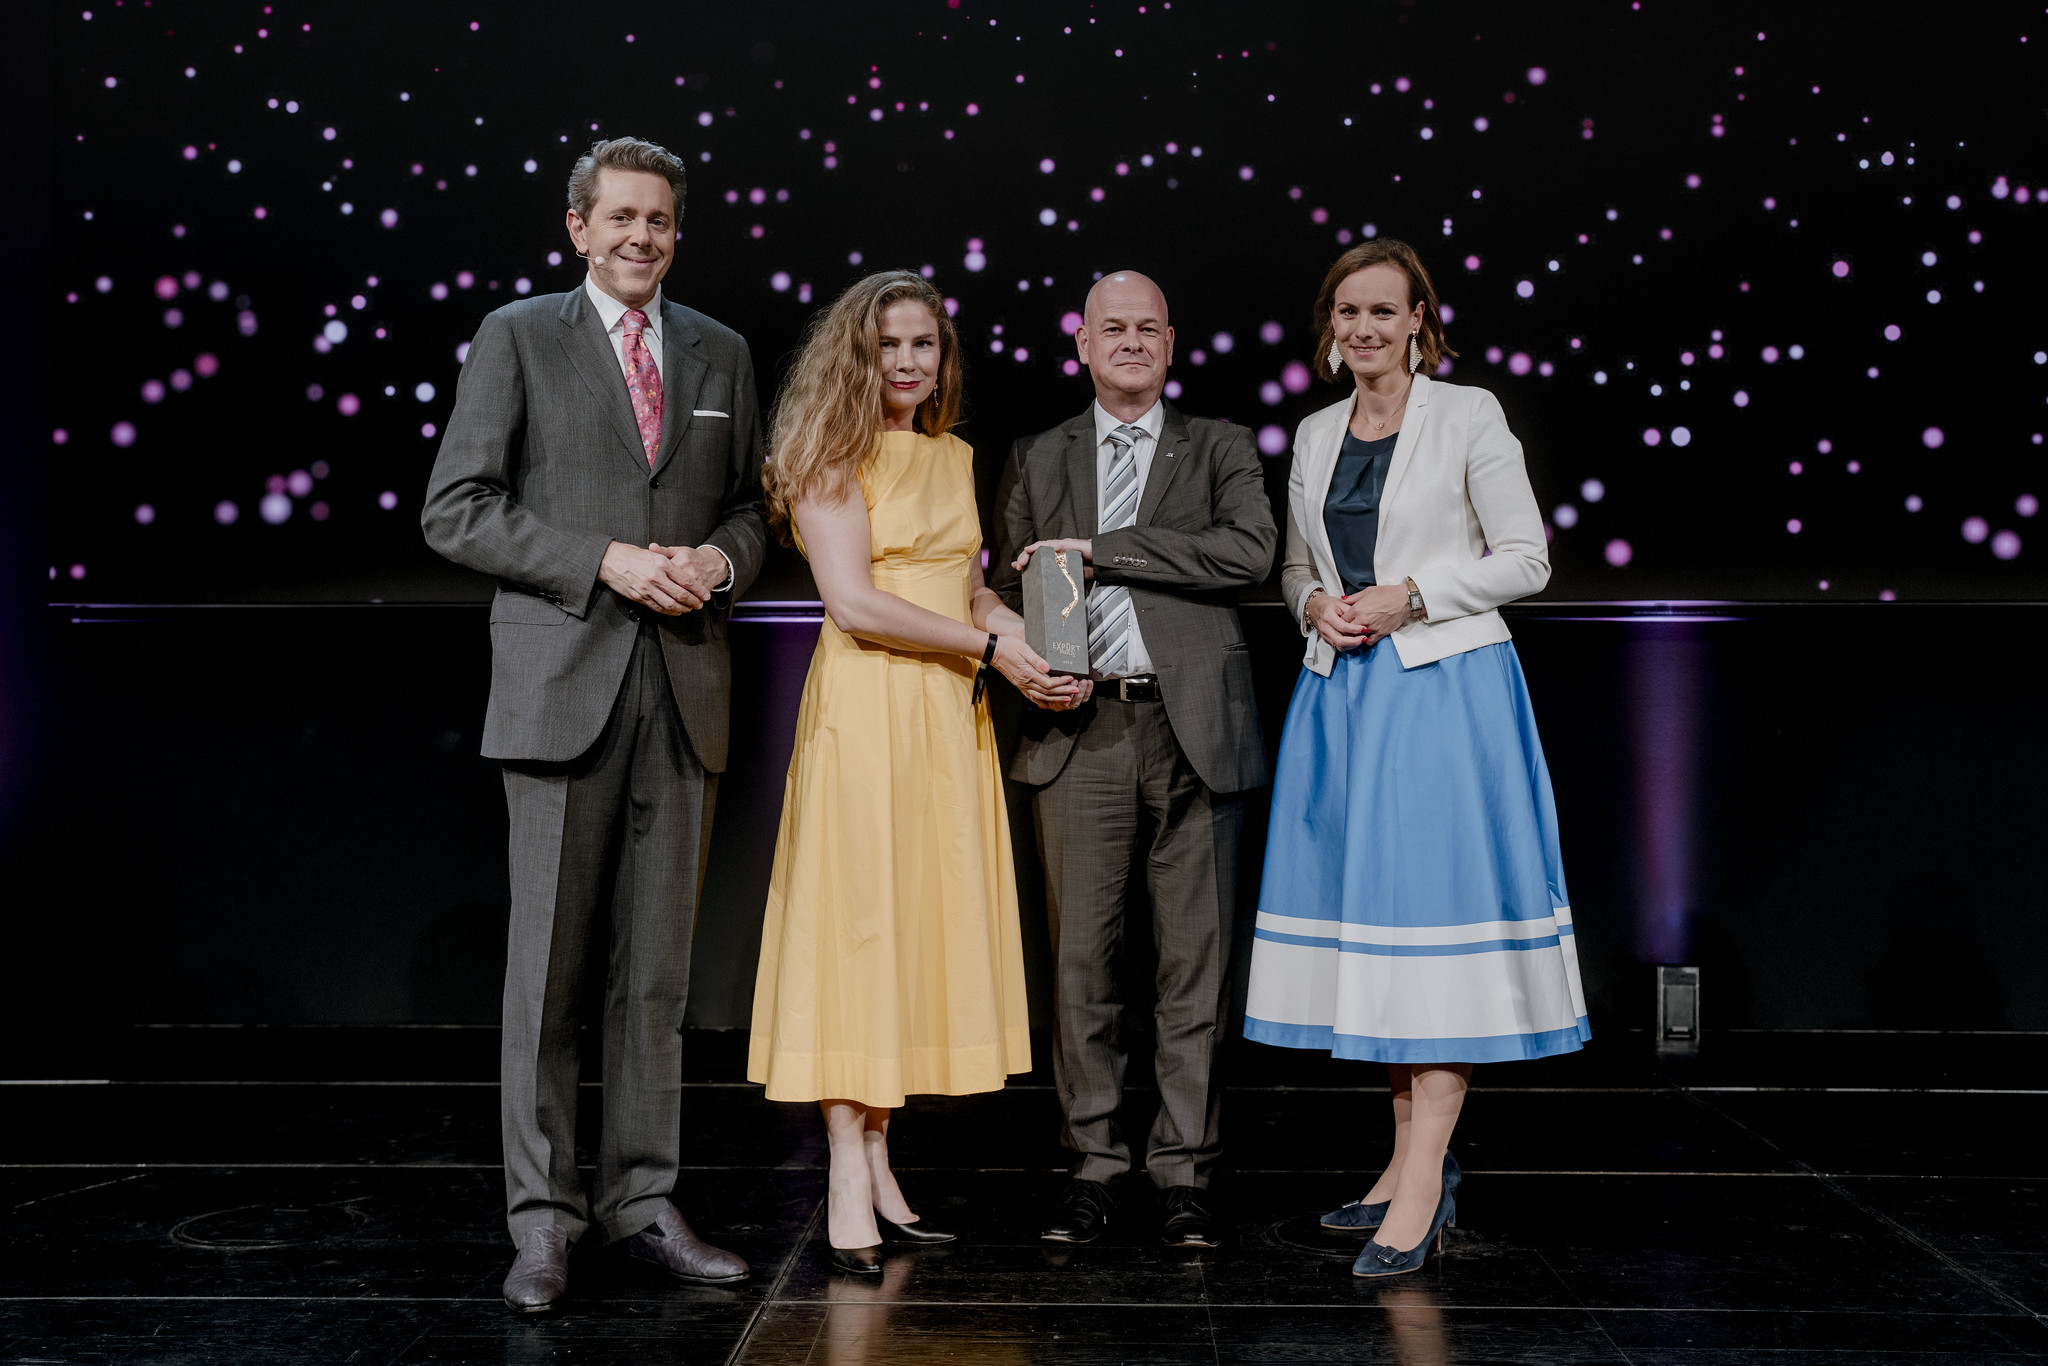 Maria Kollmann with Dirk Janetzko on behalf of AVL List GmbH received the Award